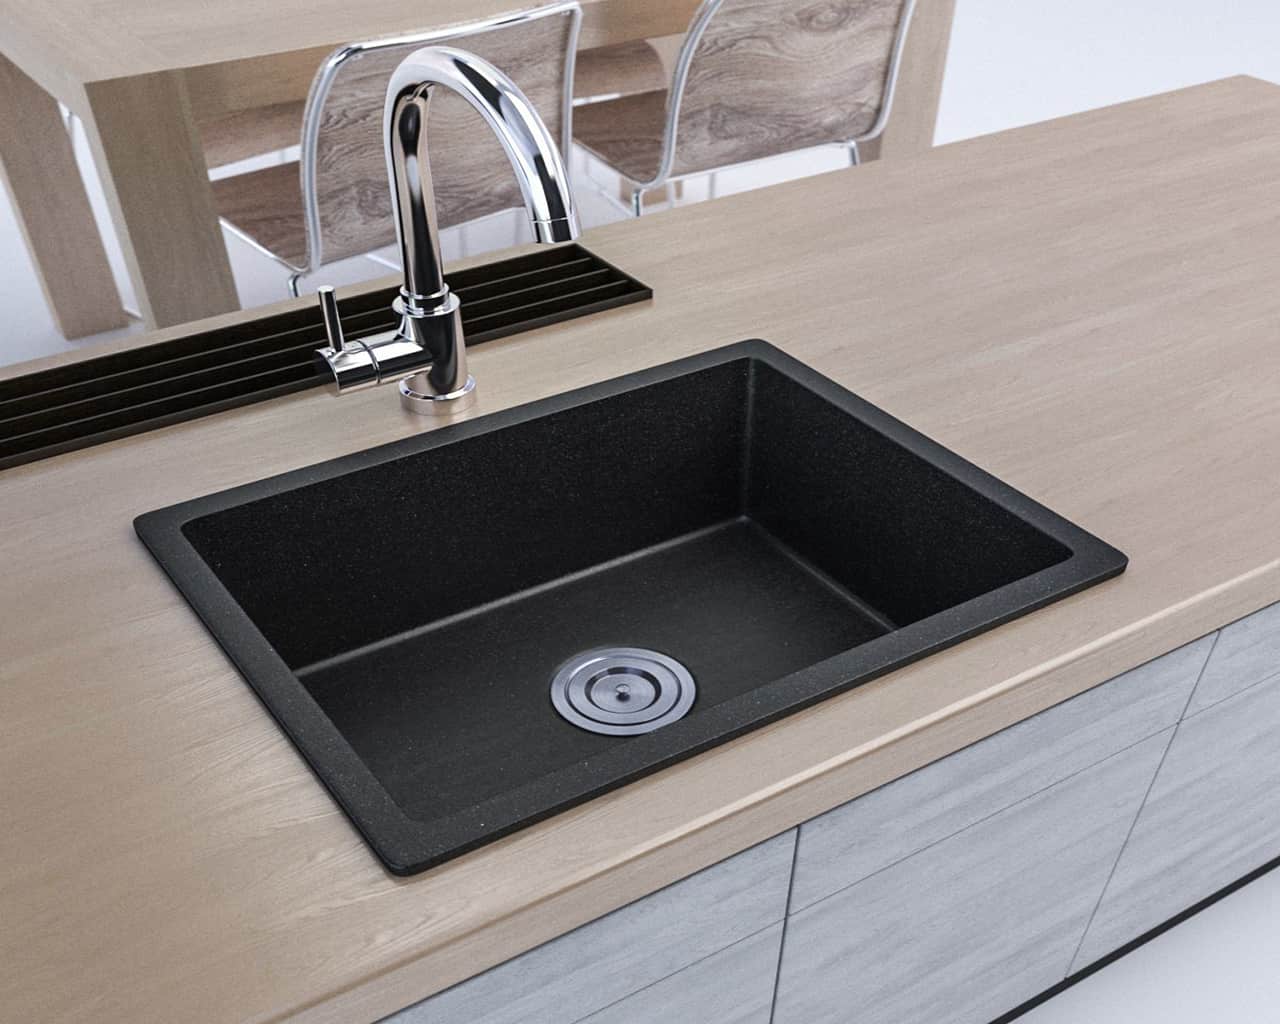 The increasing popularity of Undermount kitchen sink